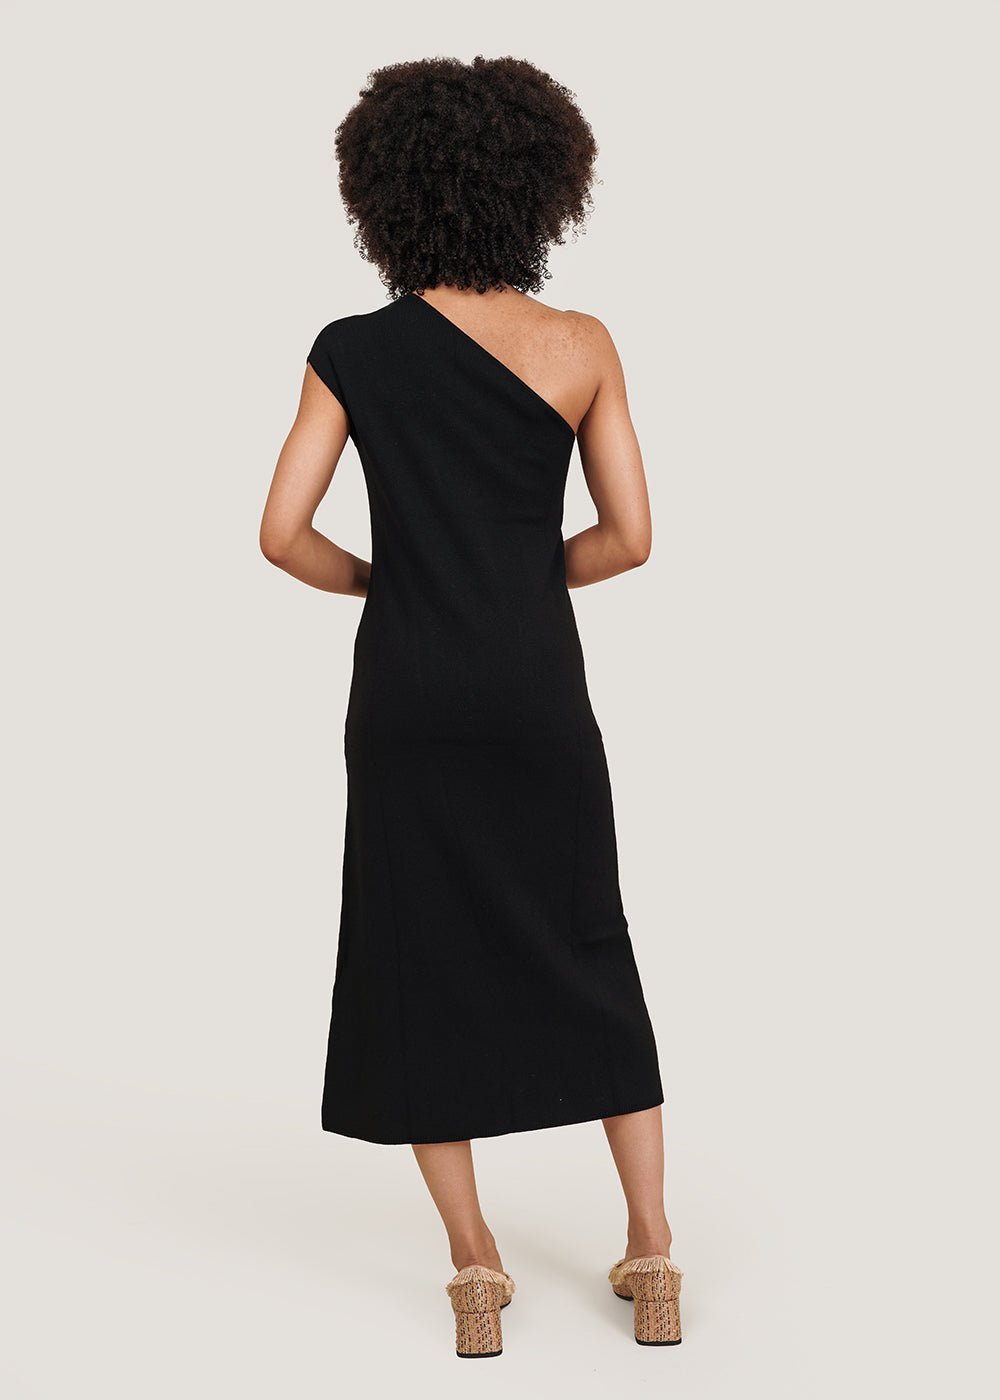 Filippa K Black Katia Dress - New Classics Studios Sustainable Ethical Fashion Canada